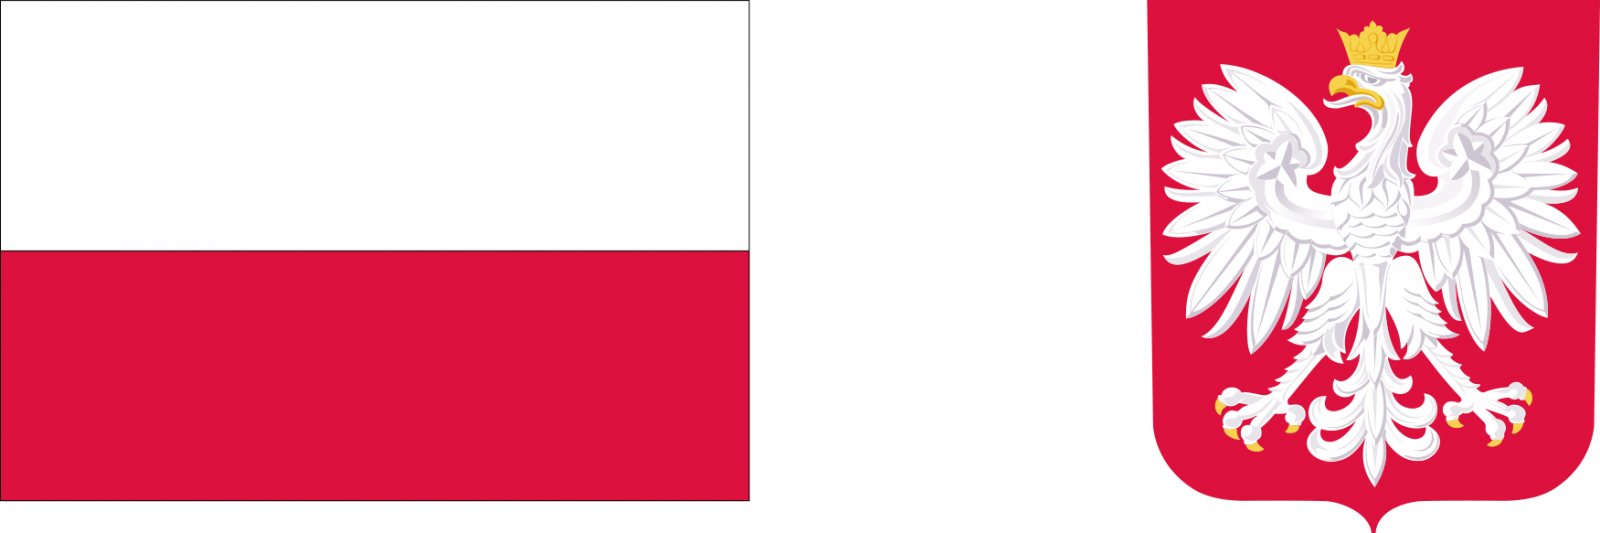 Flaga oraz herb Polski